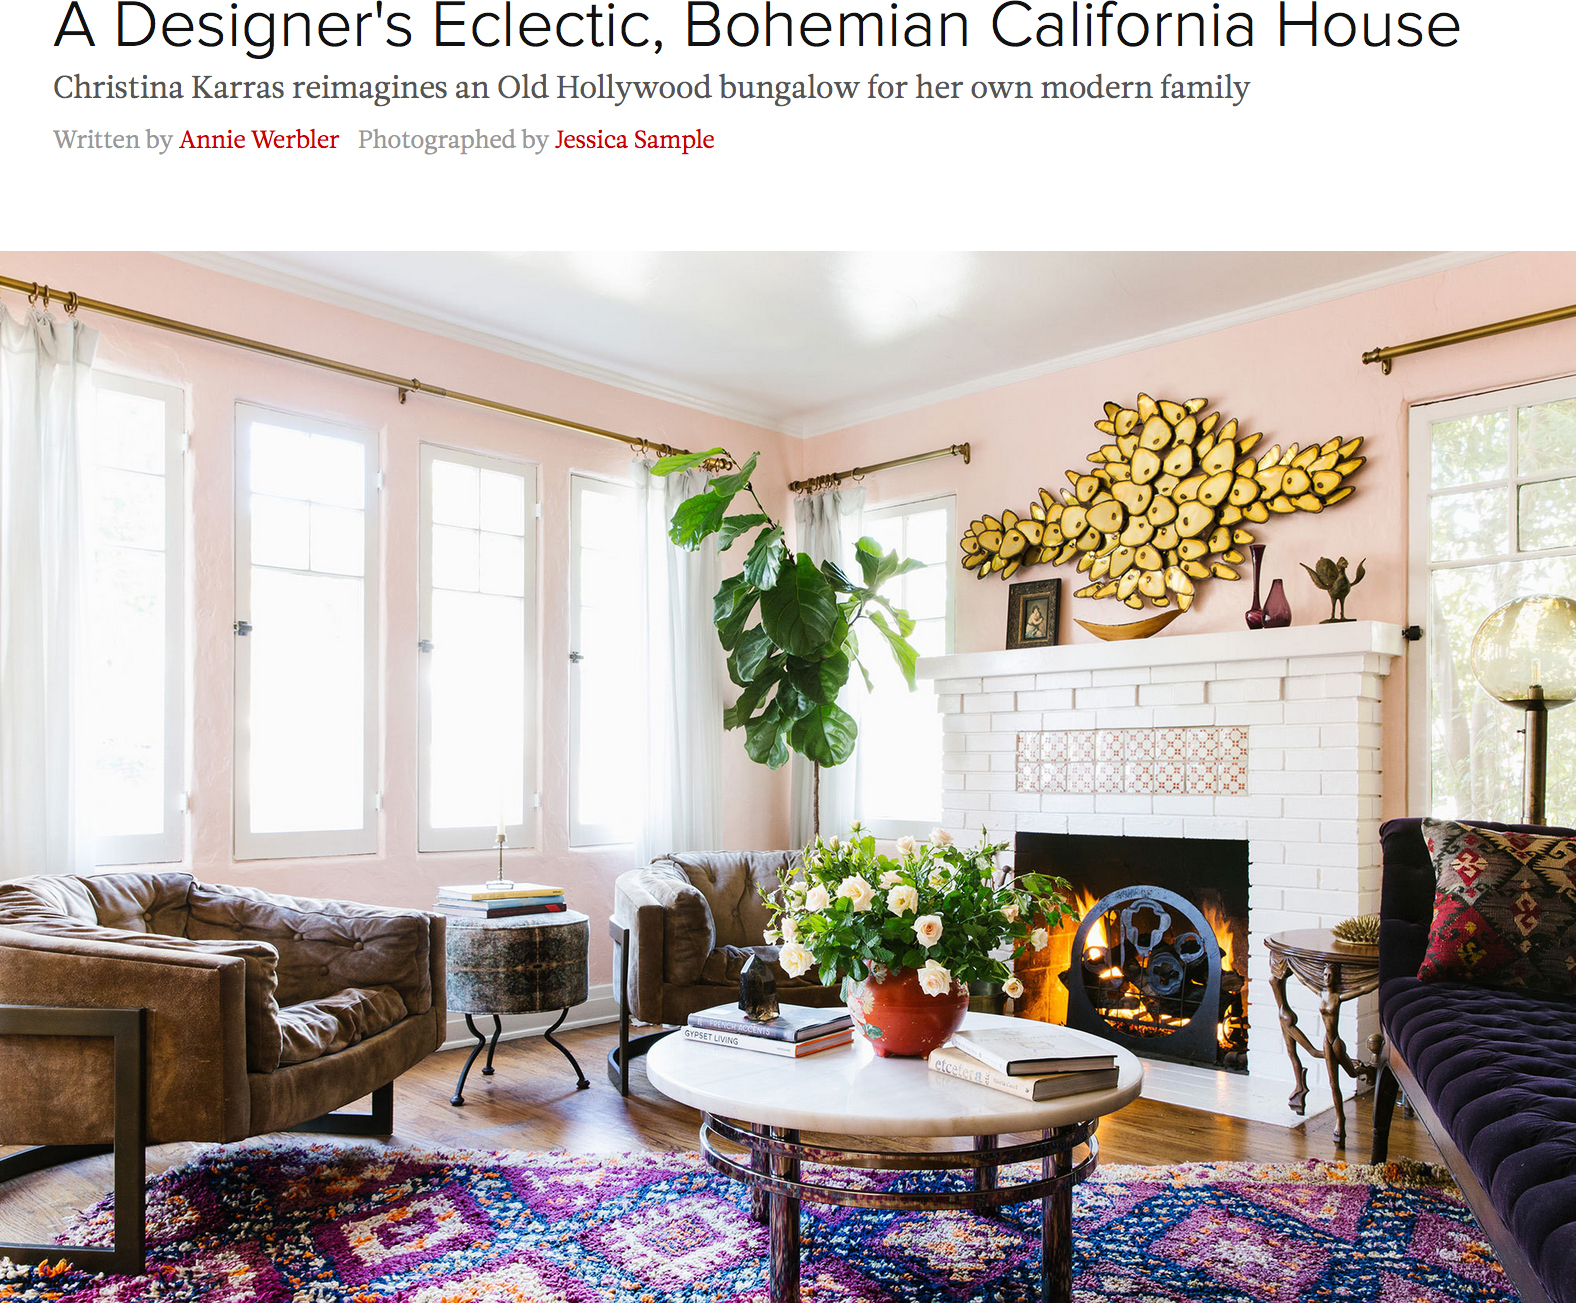  A Designer's Eclectic, Bohemian California House 